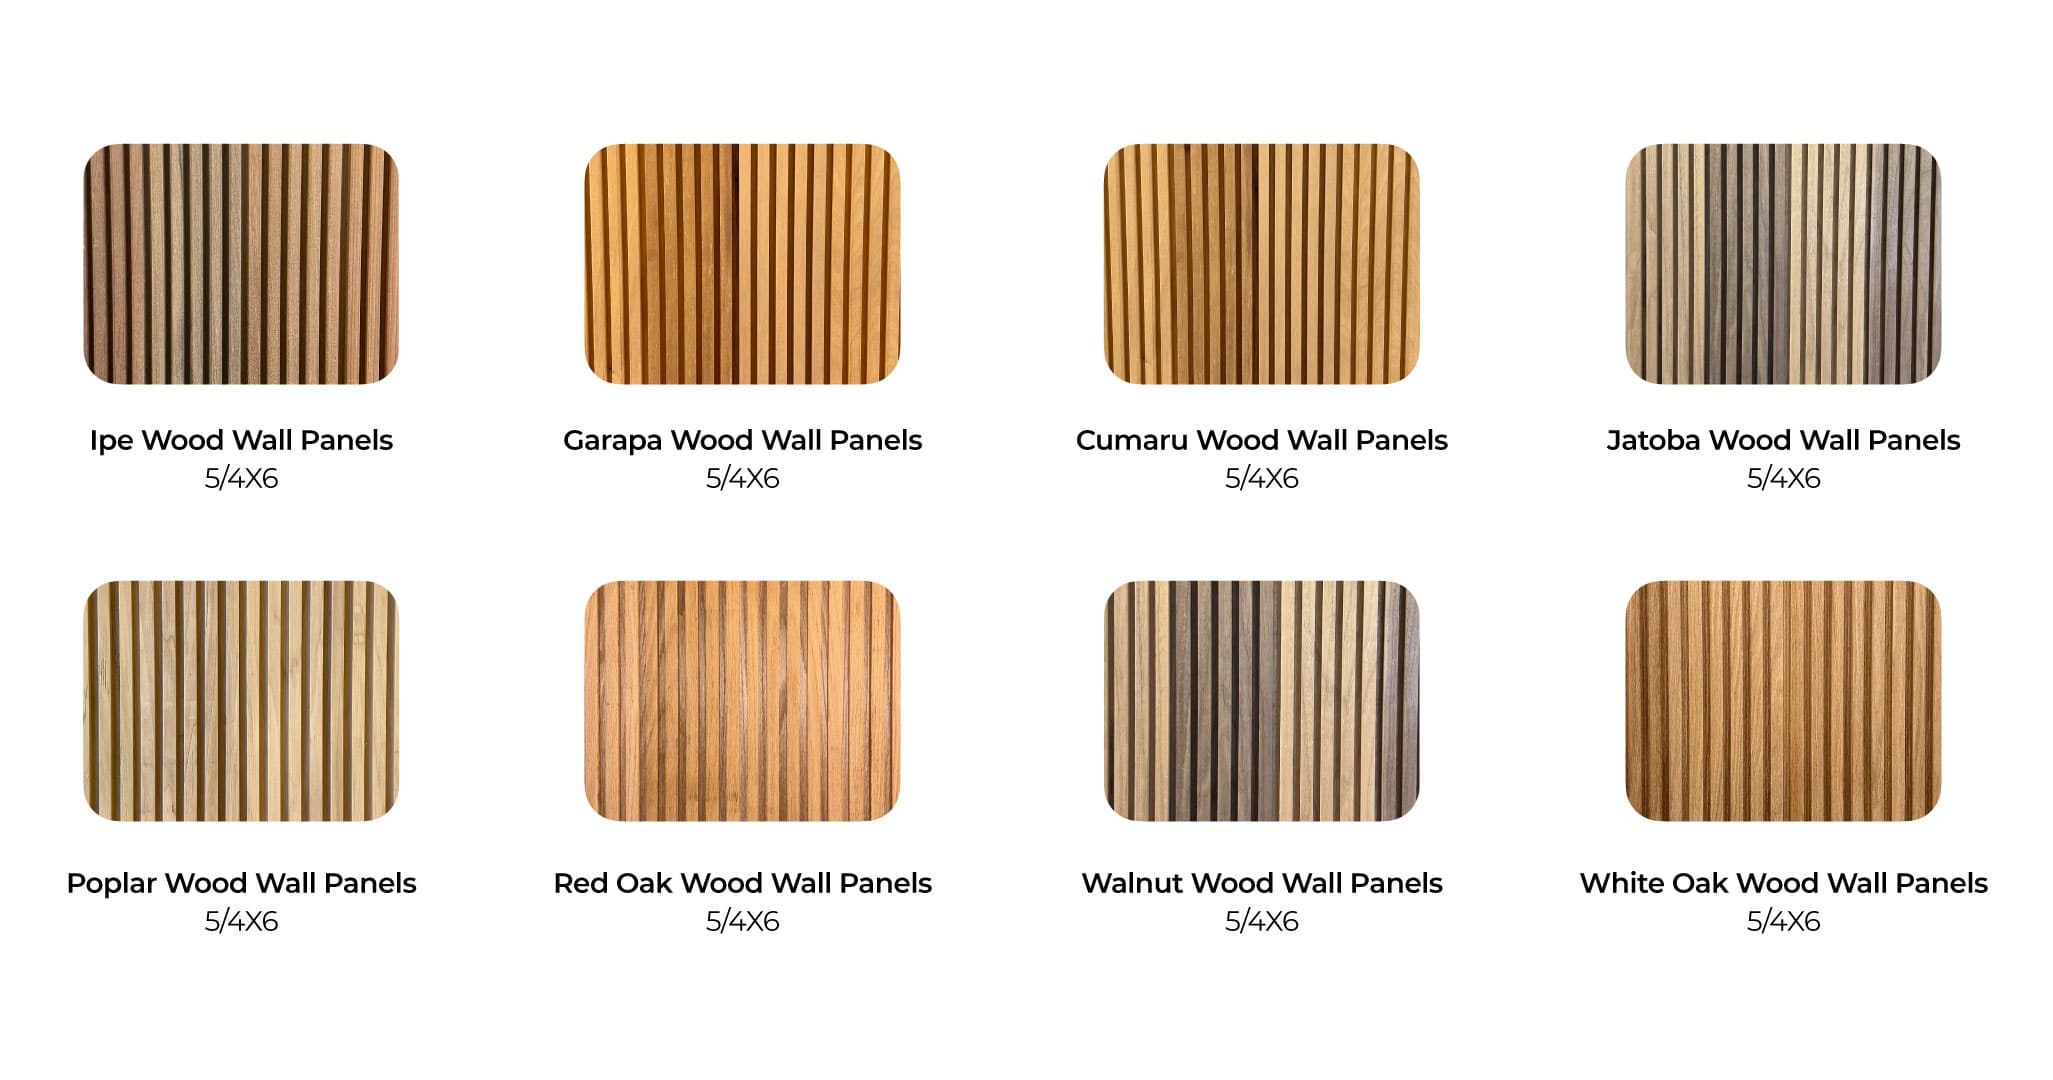 Wood Wall Panels chart